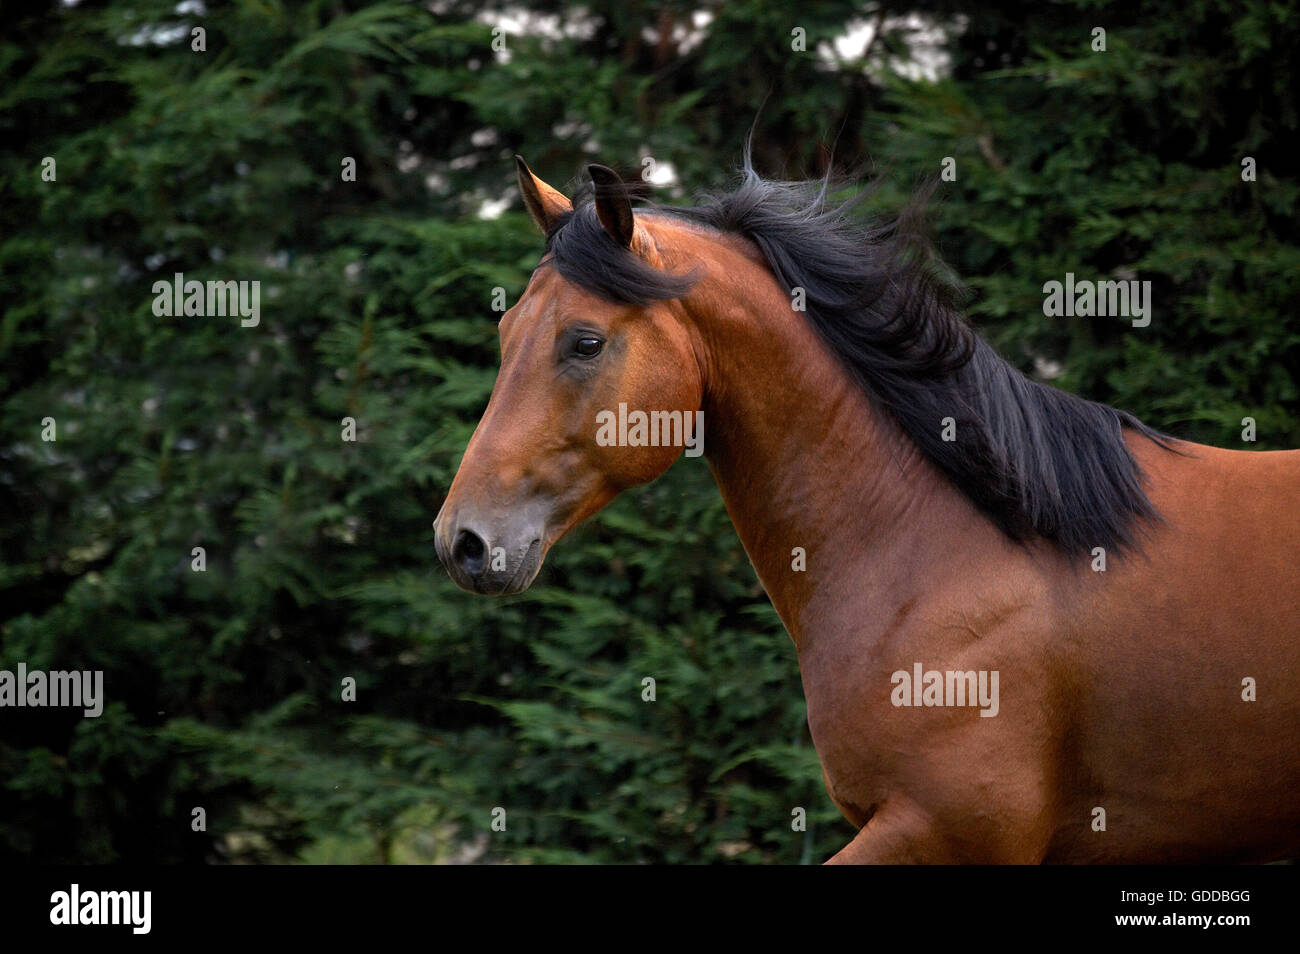 Appaloosa Horse standing in Paddock Stock Photo